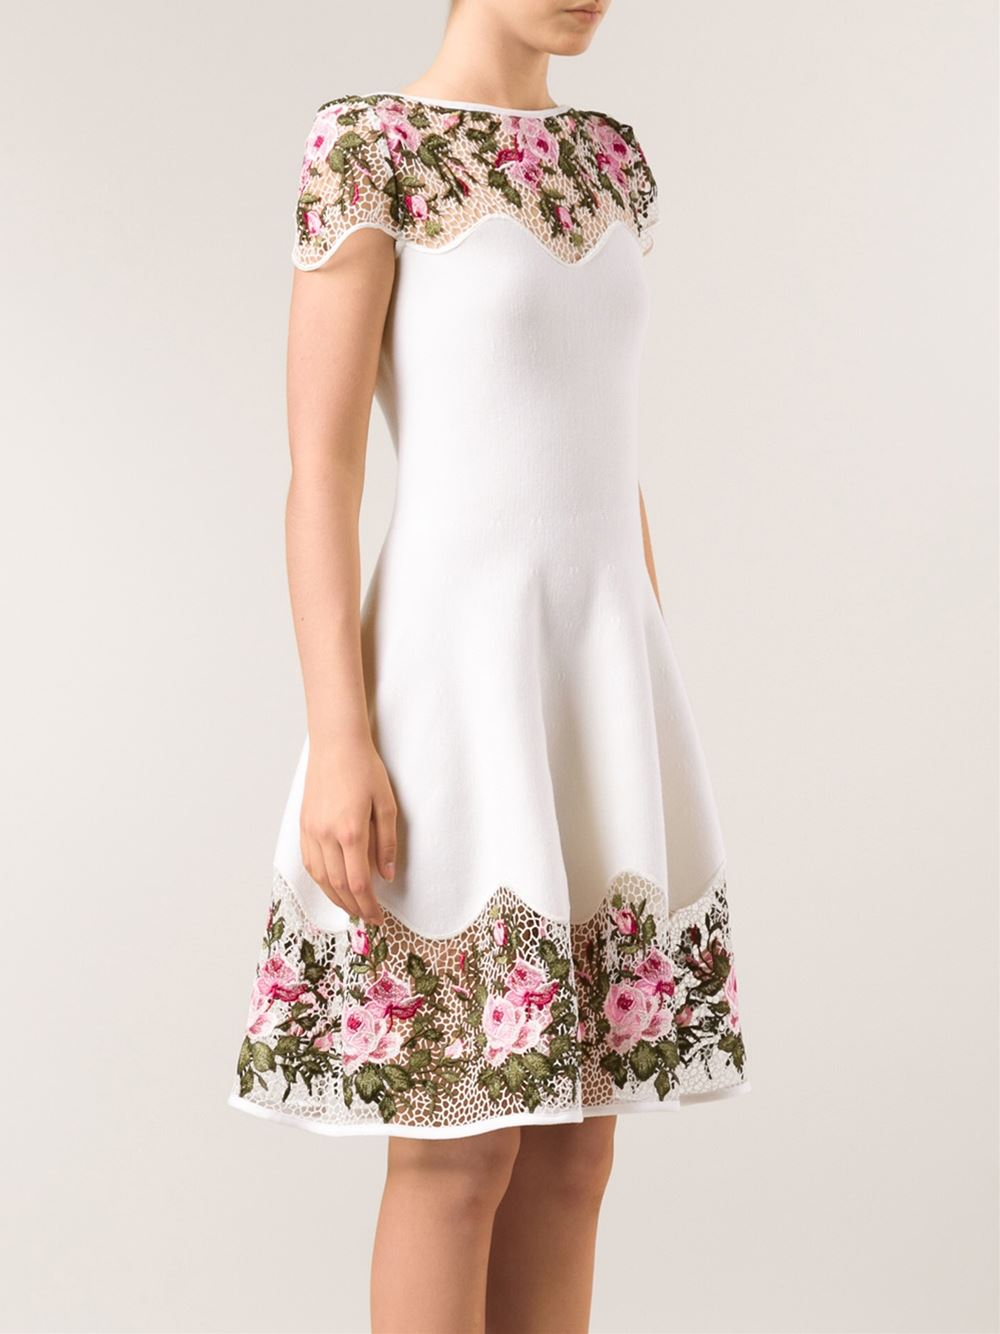 Blumarine Floral Macrame Dress in White - Lyst